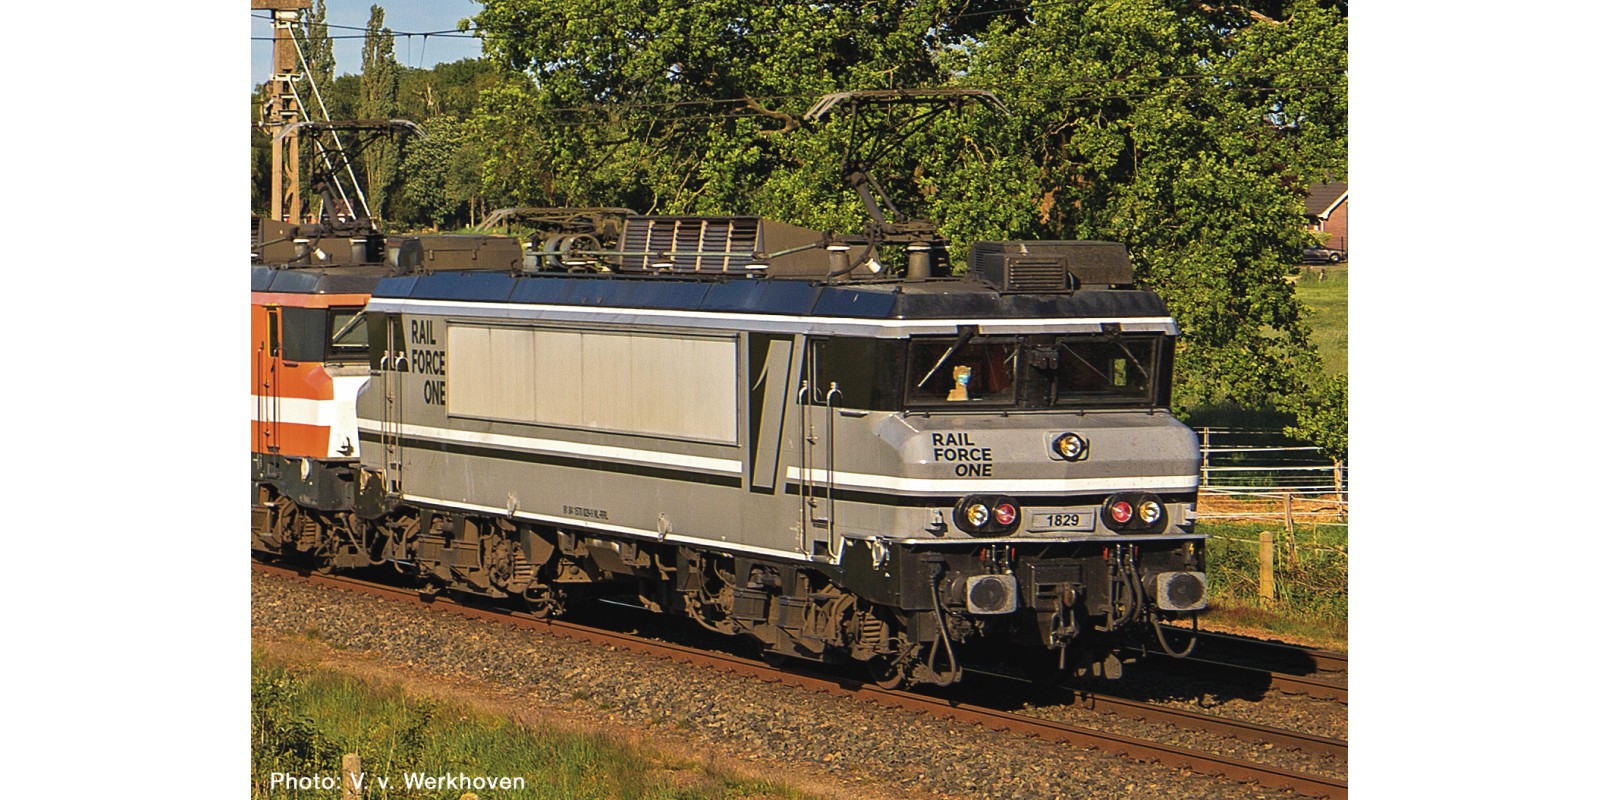 RO78164 Electric locomotive 1829, Rail Force One